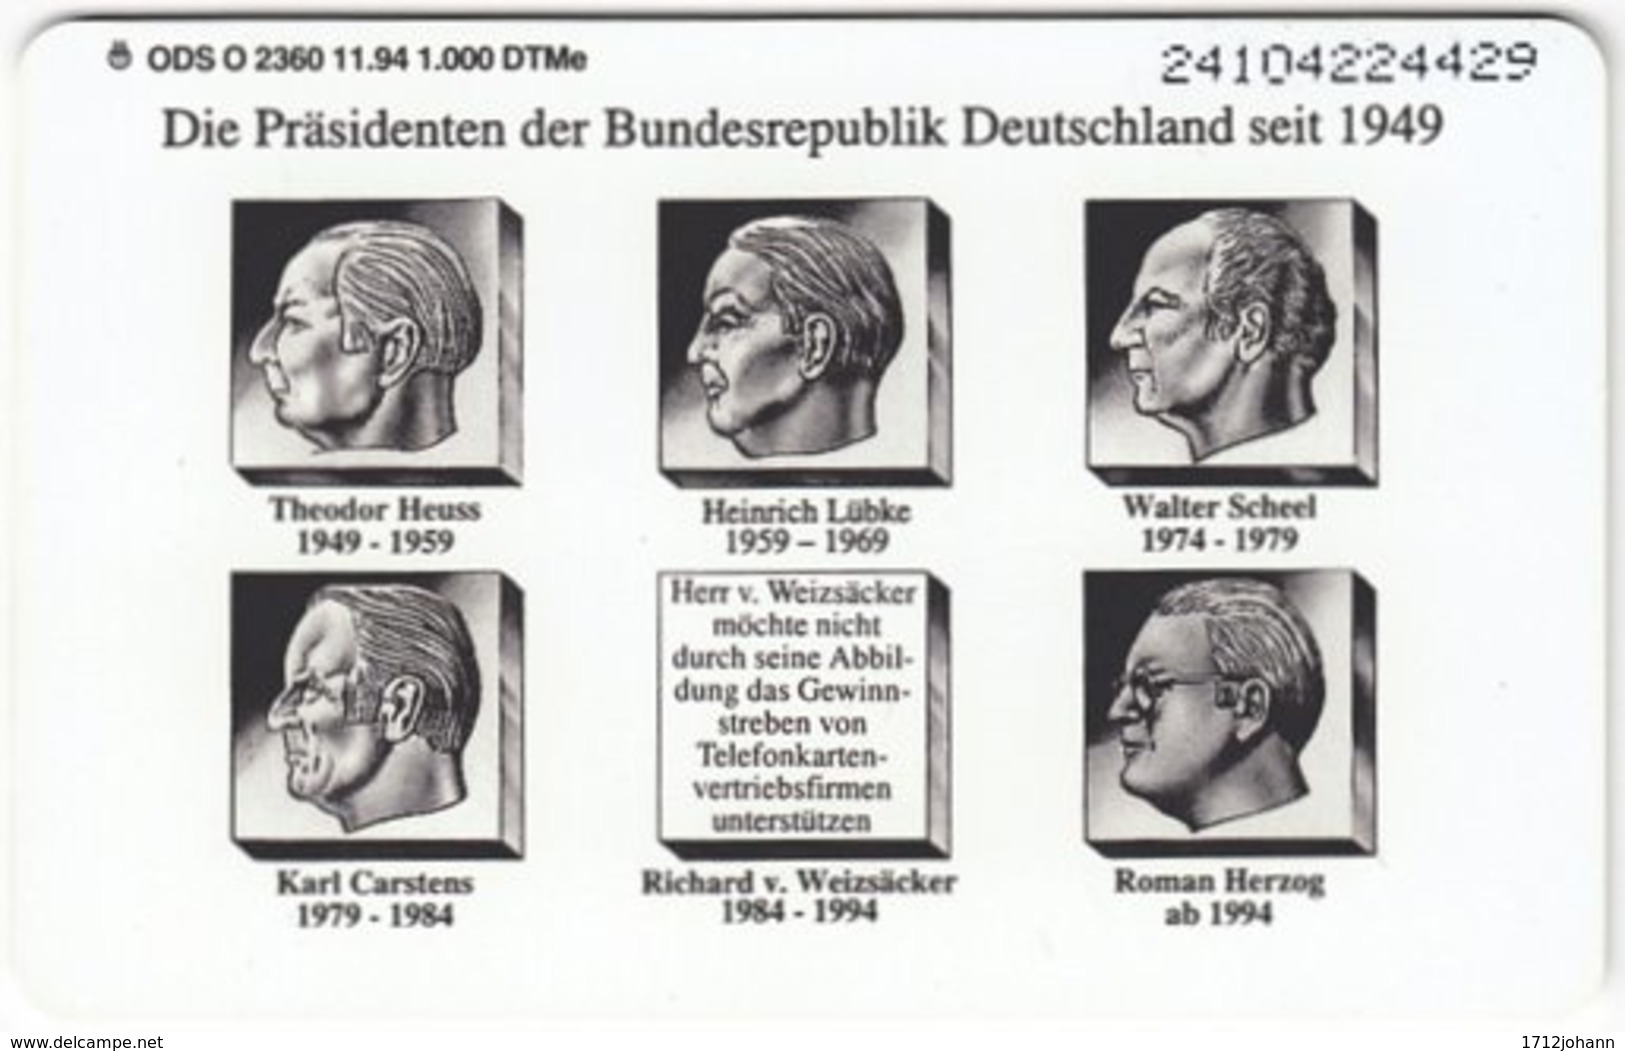 GERMANY O-Serie B-235 - 2360 11.94 - Painting, Politicians - MINT - O-Series: Kundenserie Vom Sammlerservice Ausgeschlossen